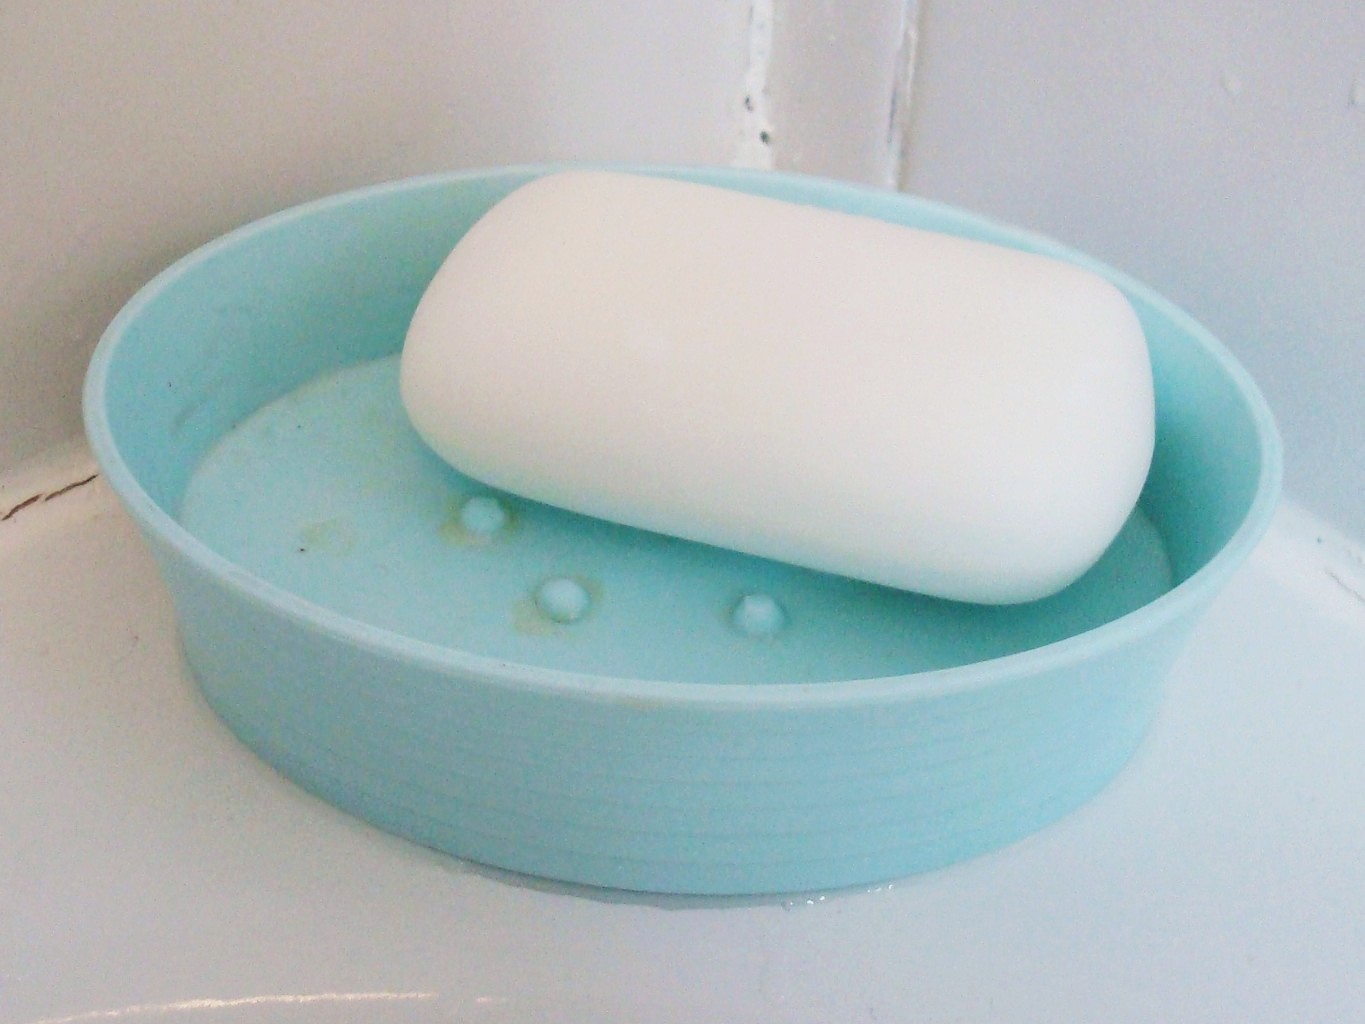 Soap in blue dish